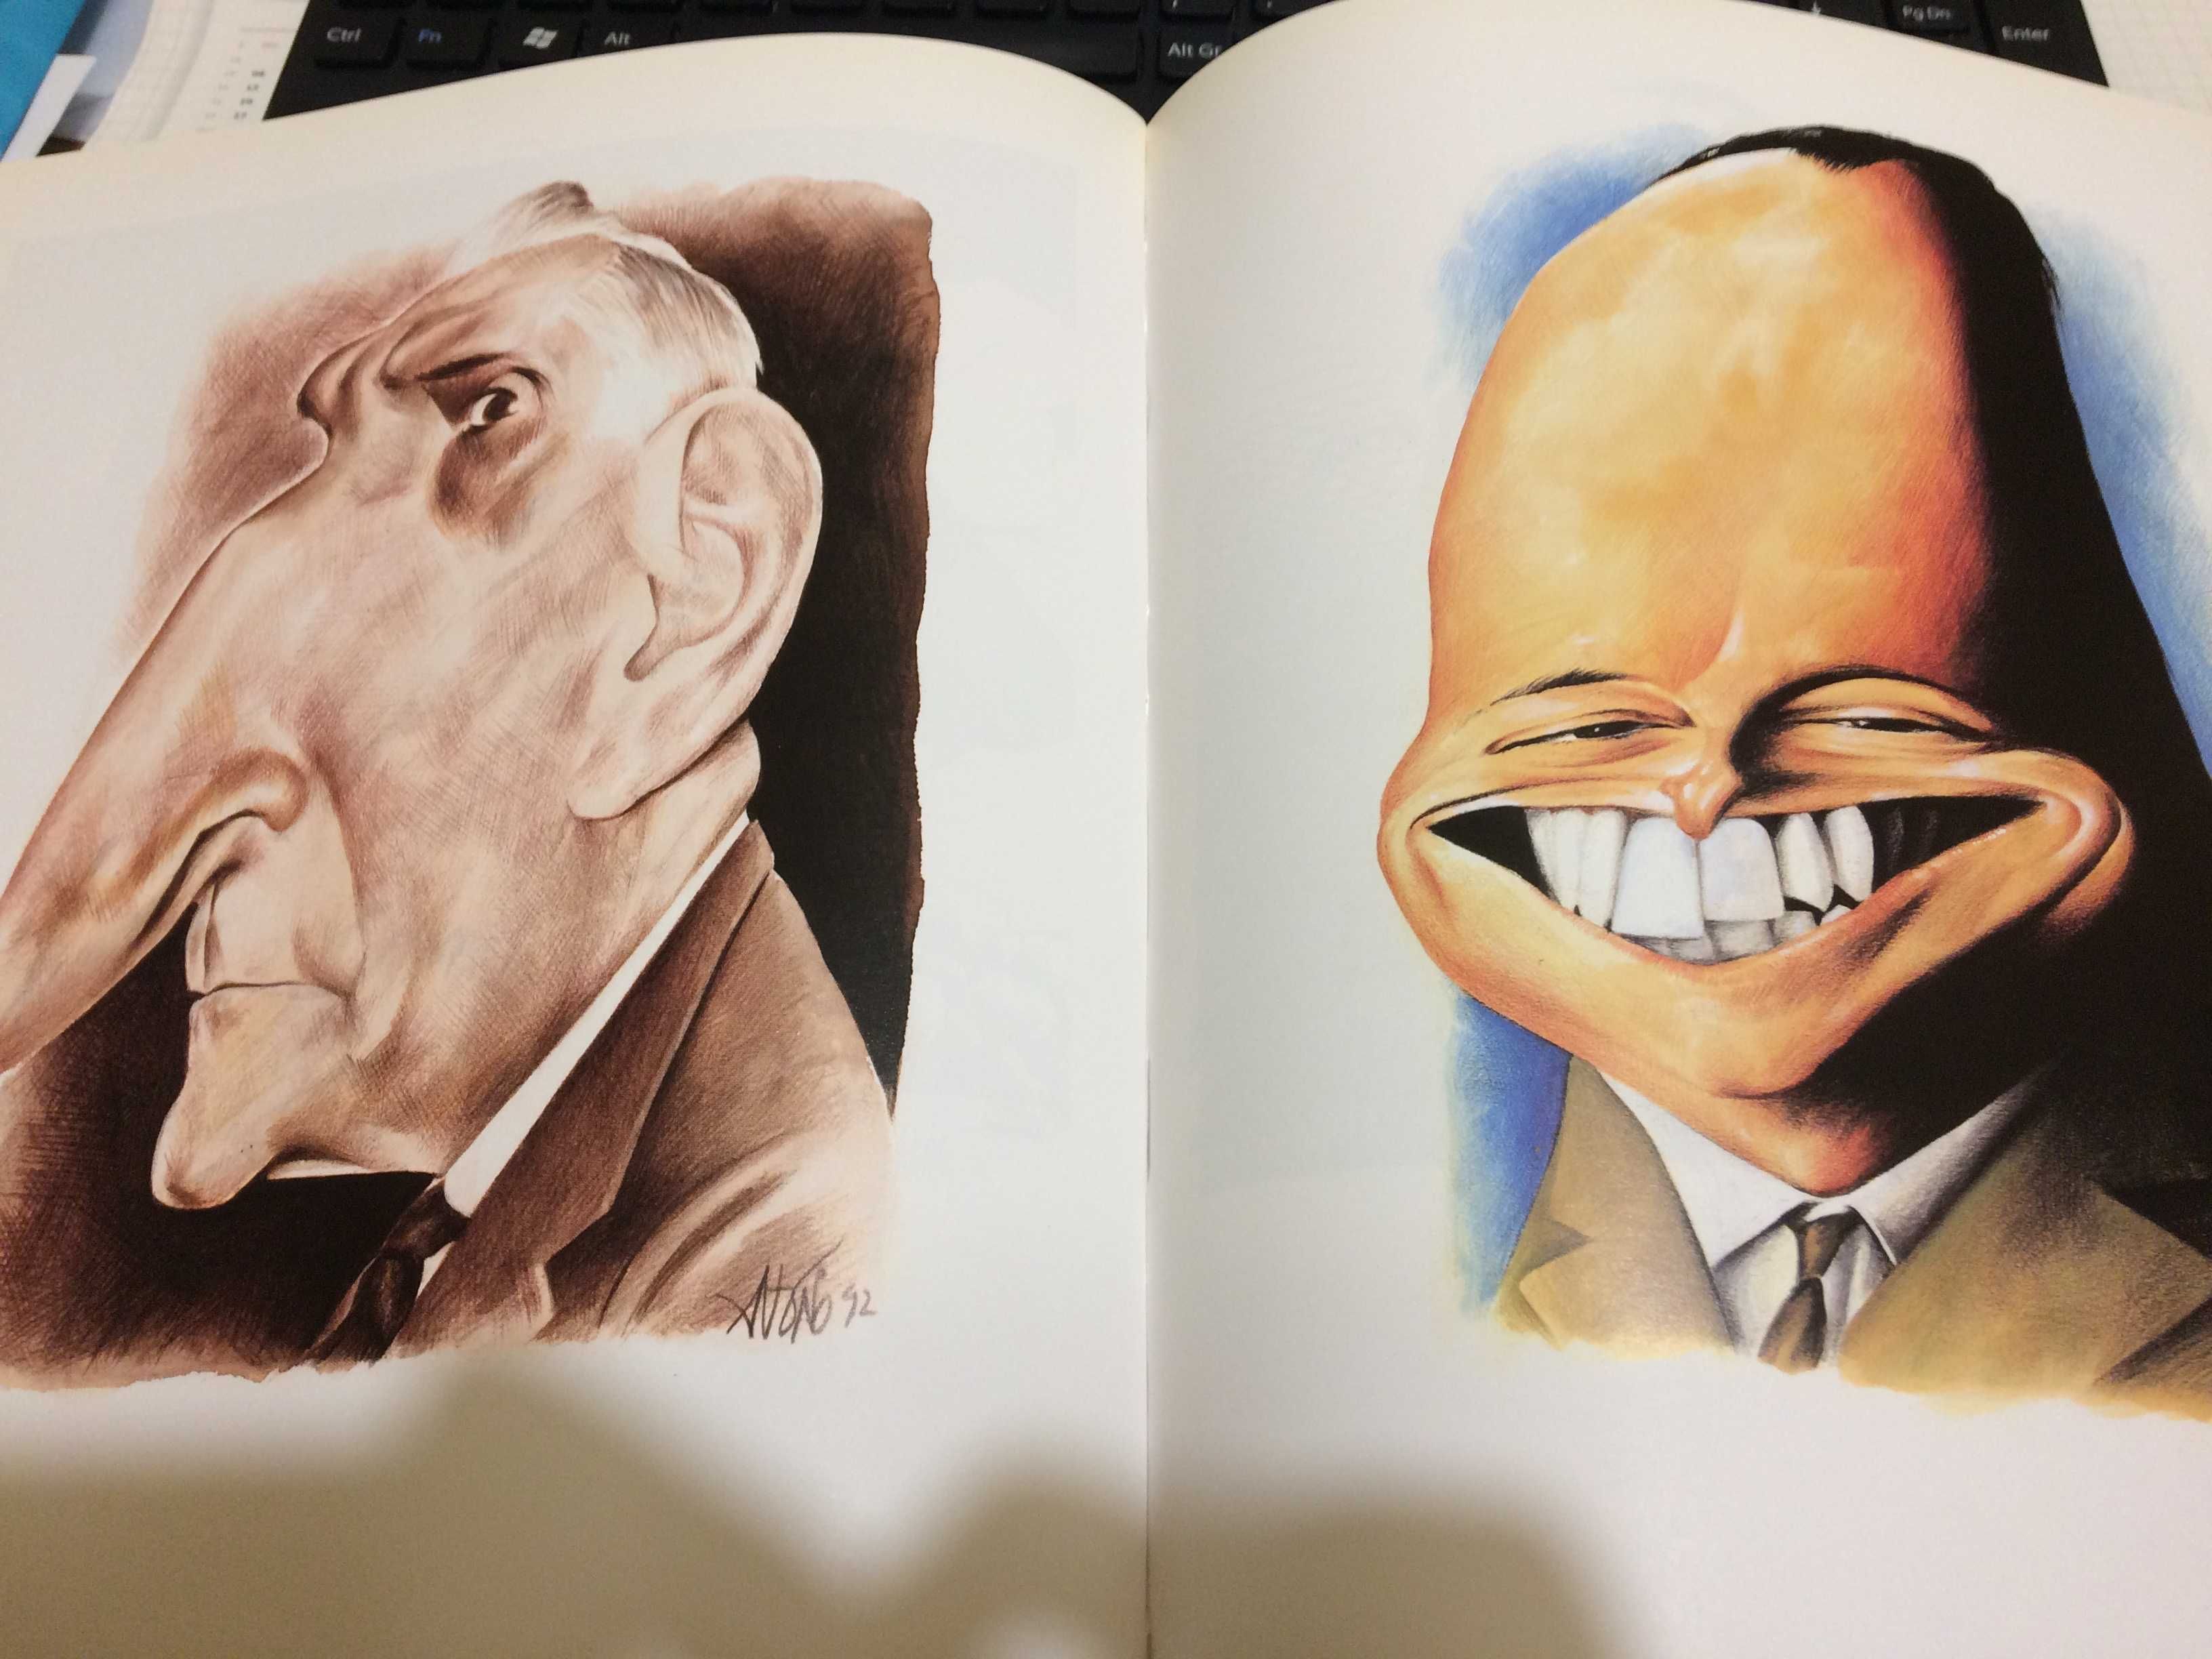 Livro de caricaturas de António